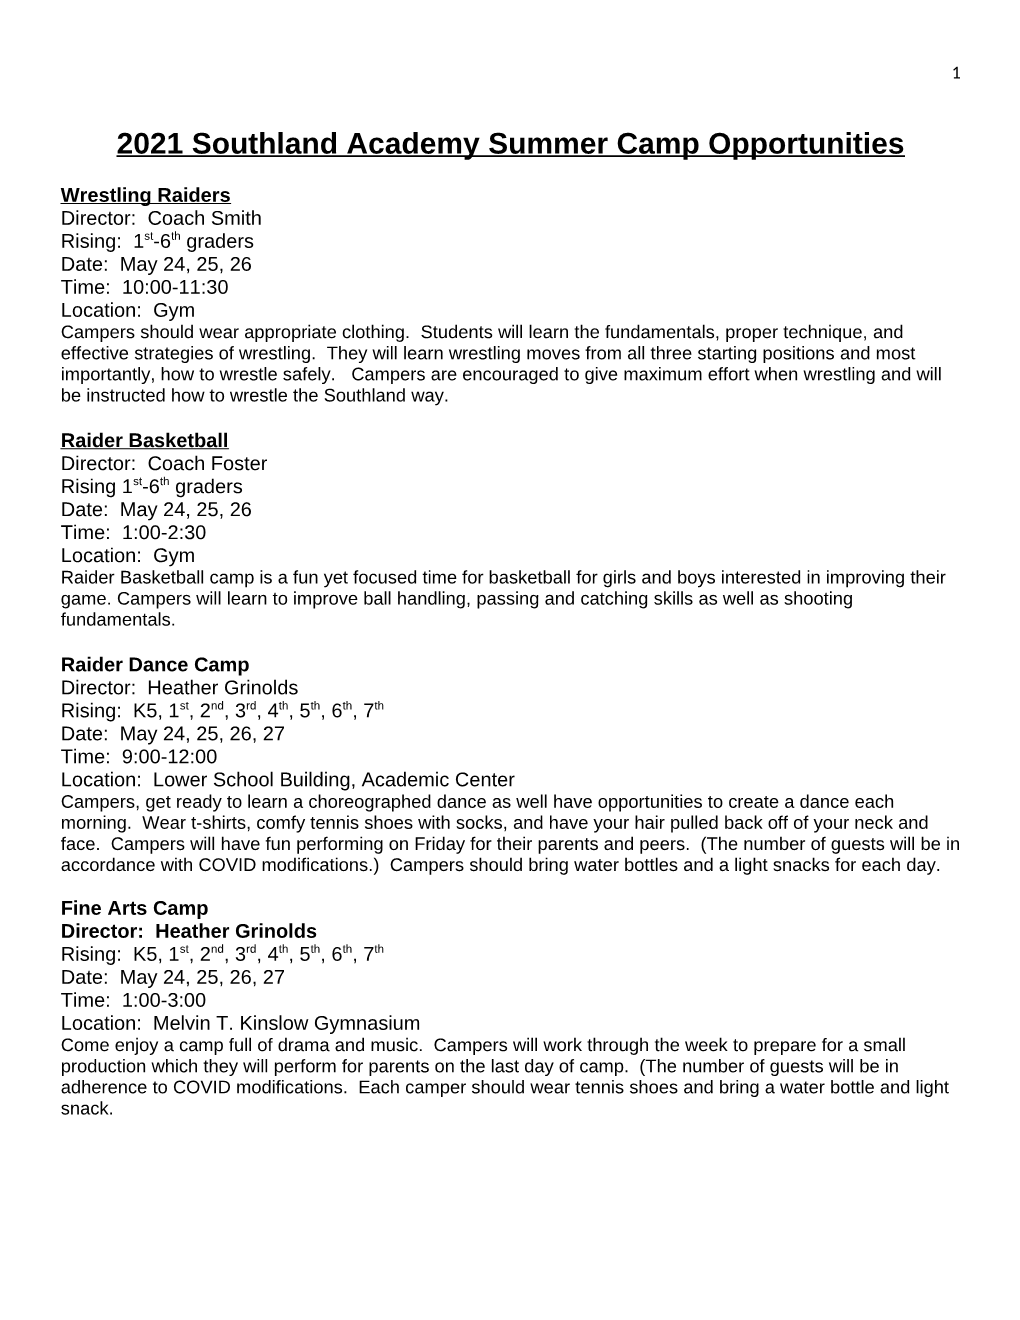 2021 Southland Academy Summer Camp Opportunities